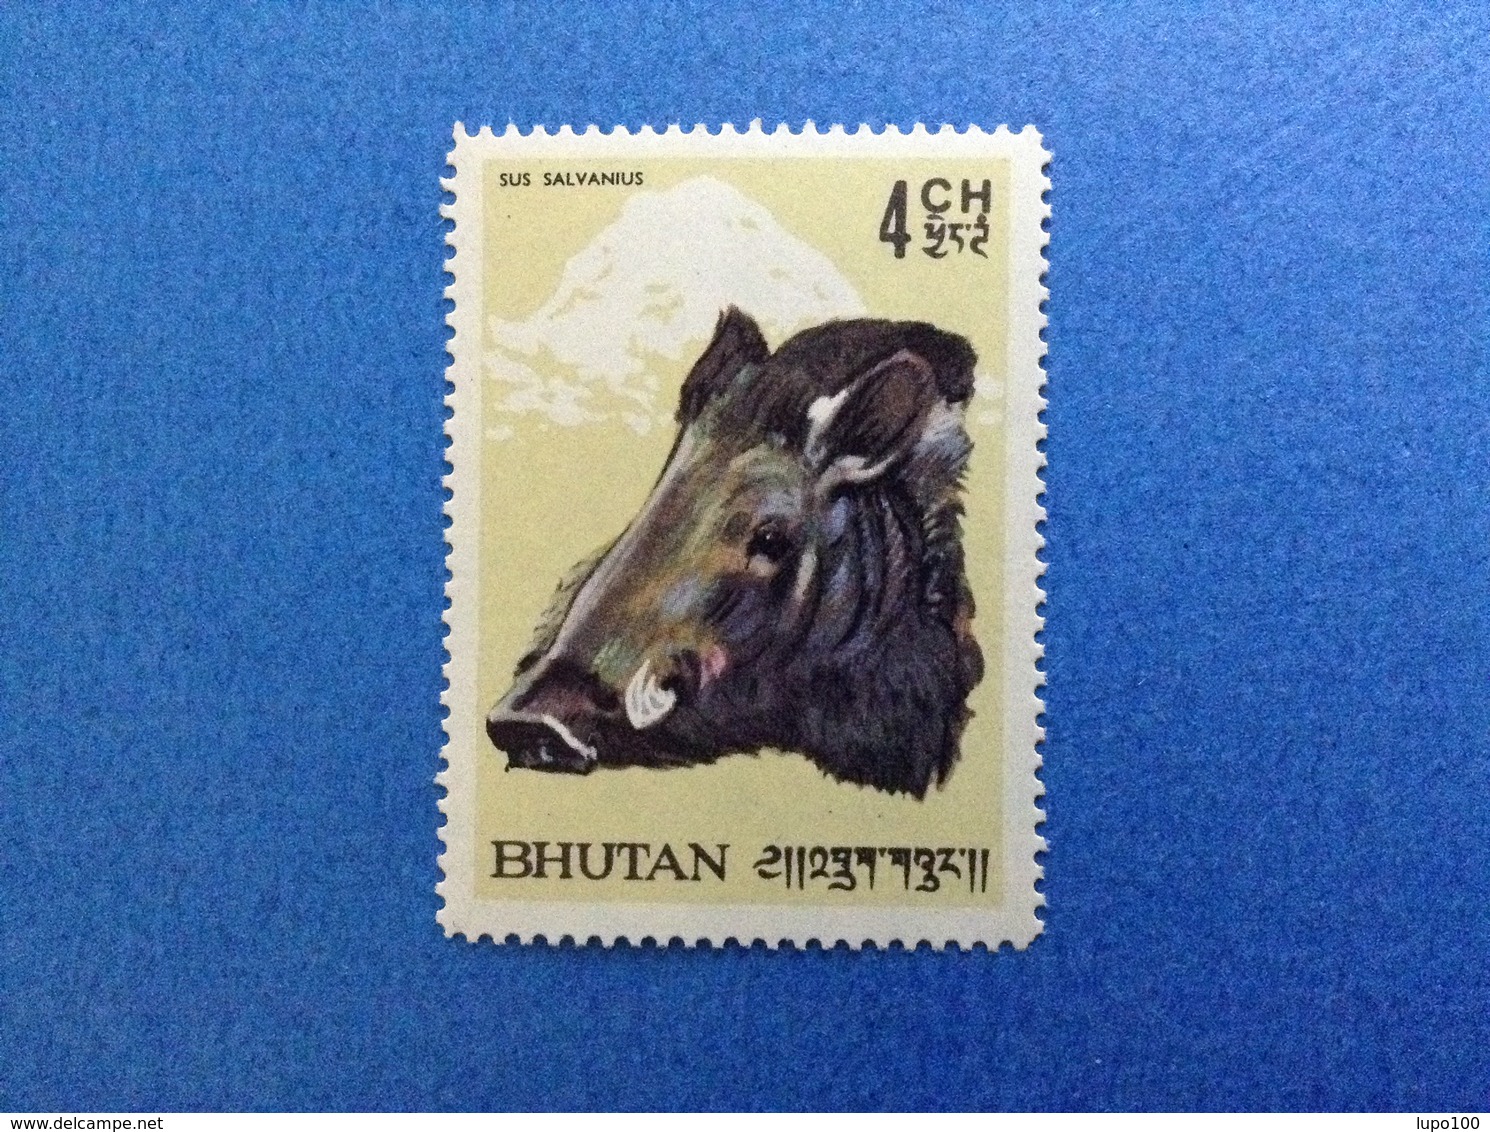 BHUTAN 4 CH FAUNA ANIMALI CINGHIALI SUS SALVANIUS FRANCOBOLLO NUOVO STAMP NEW MNH** - Bhutan